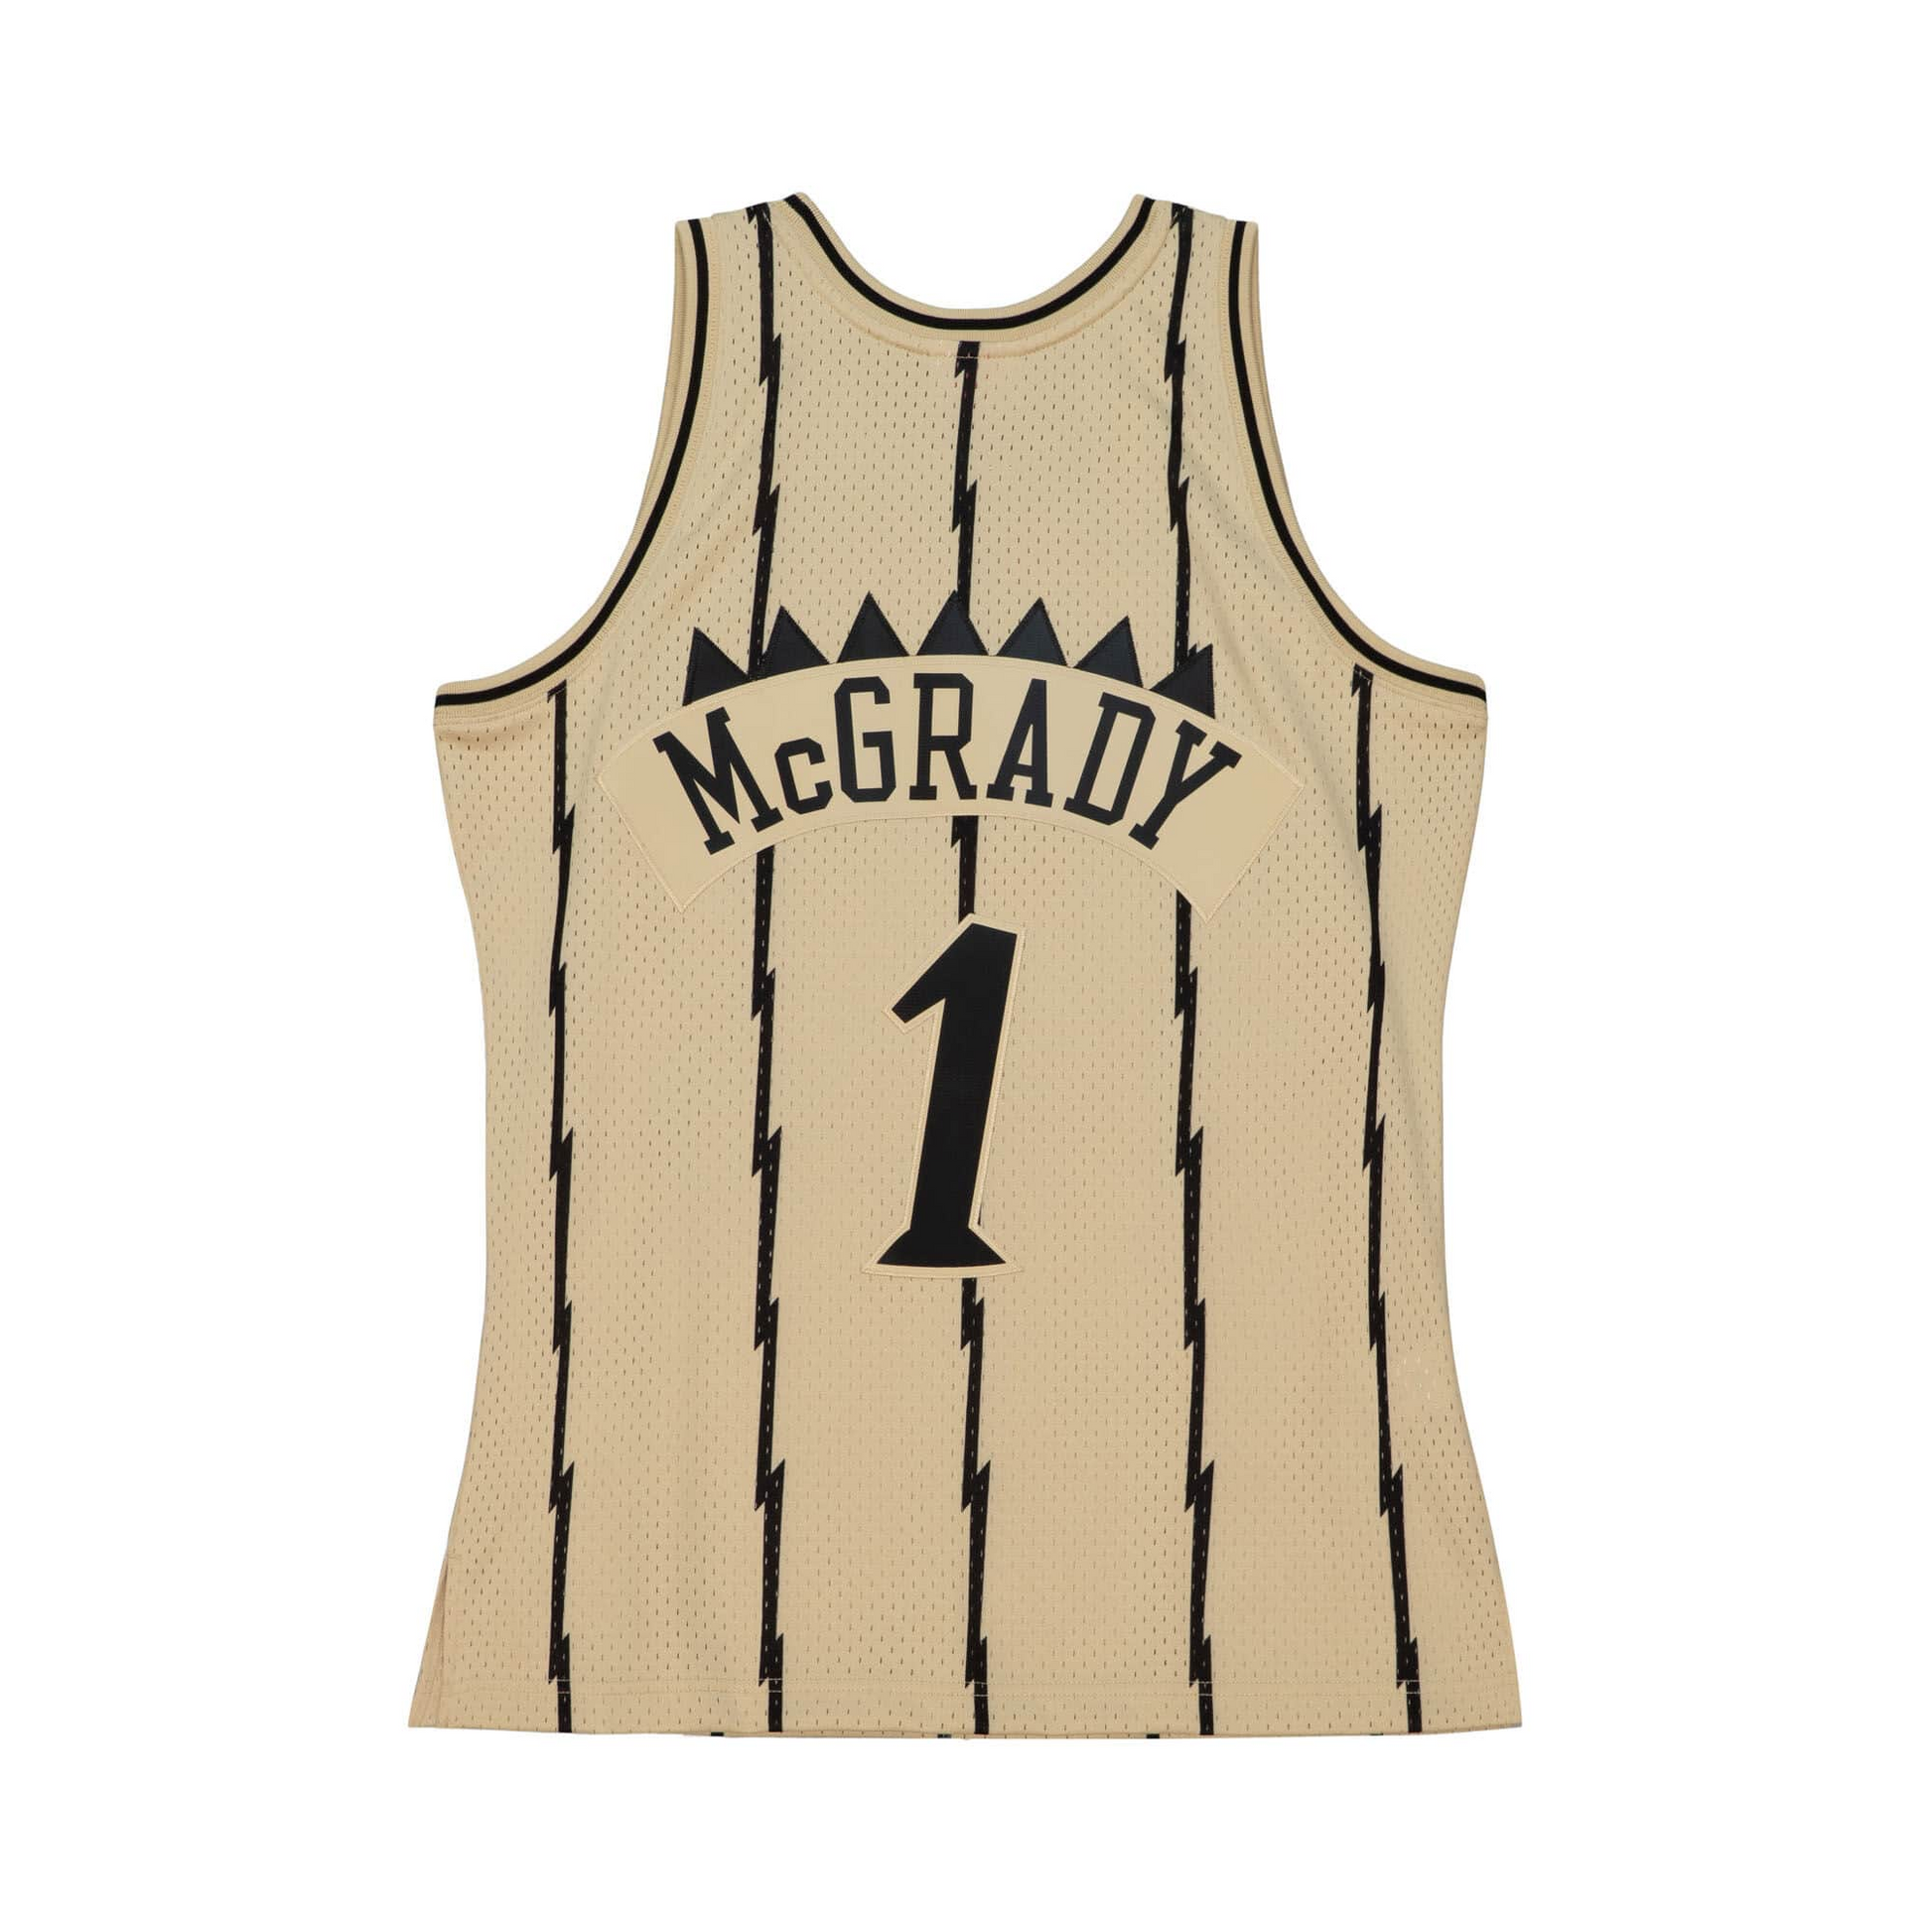 Tracy McGrady Jerseys, Tracy McGrady Shirts, Basketball Apparel